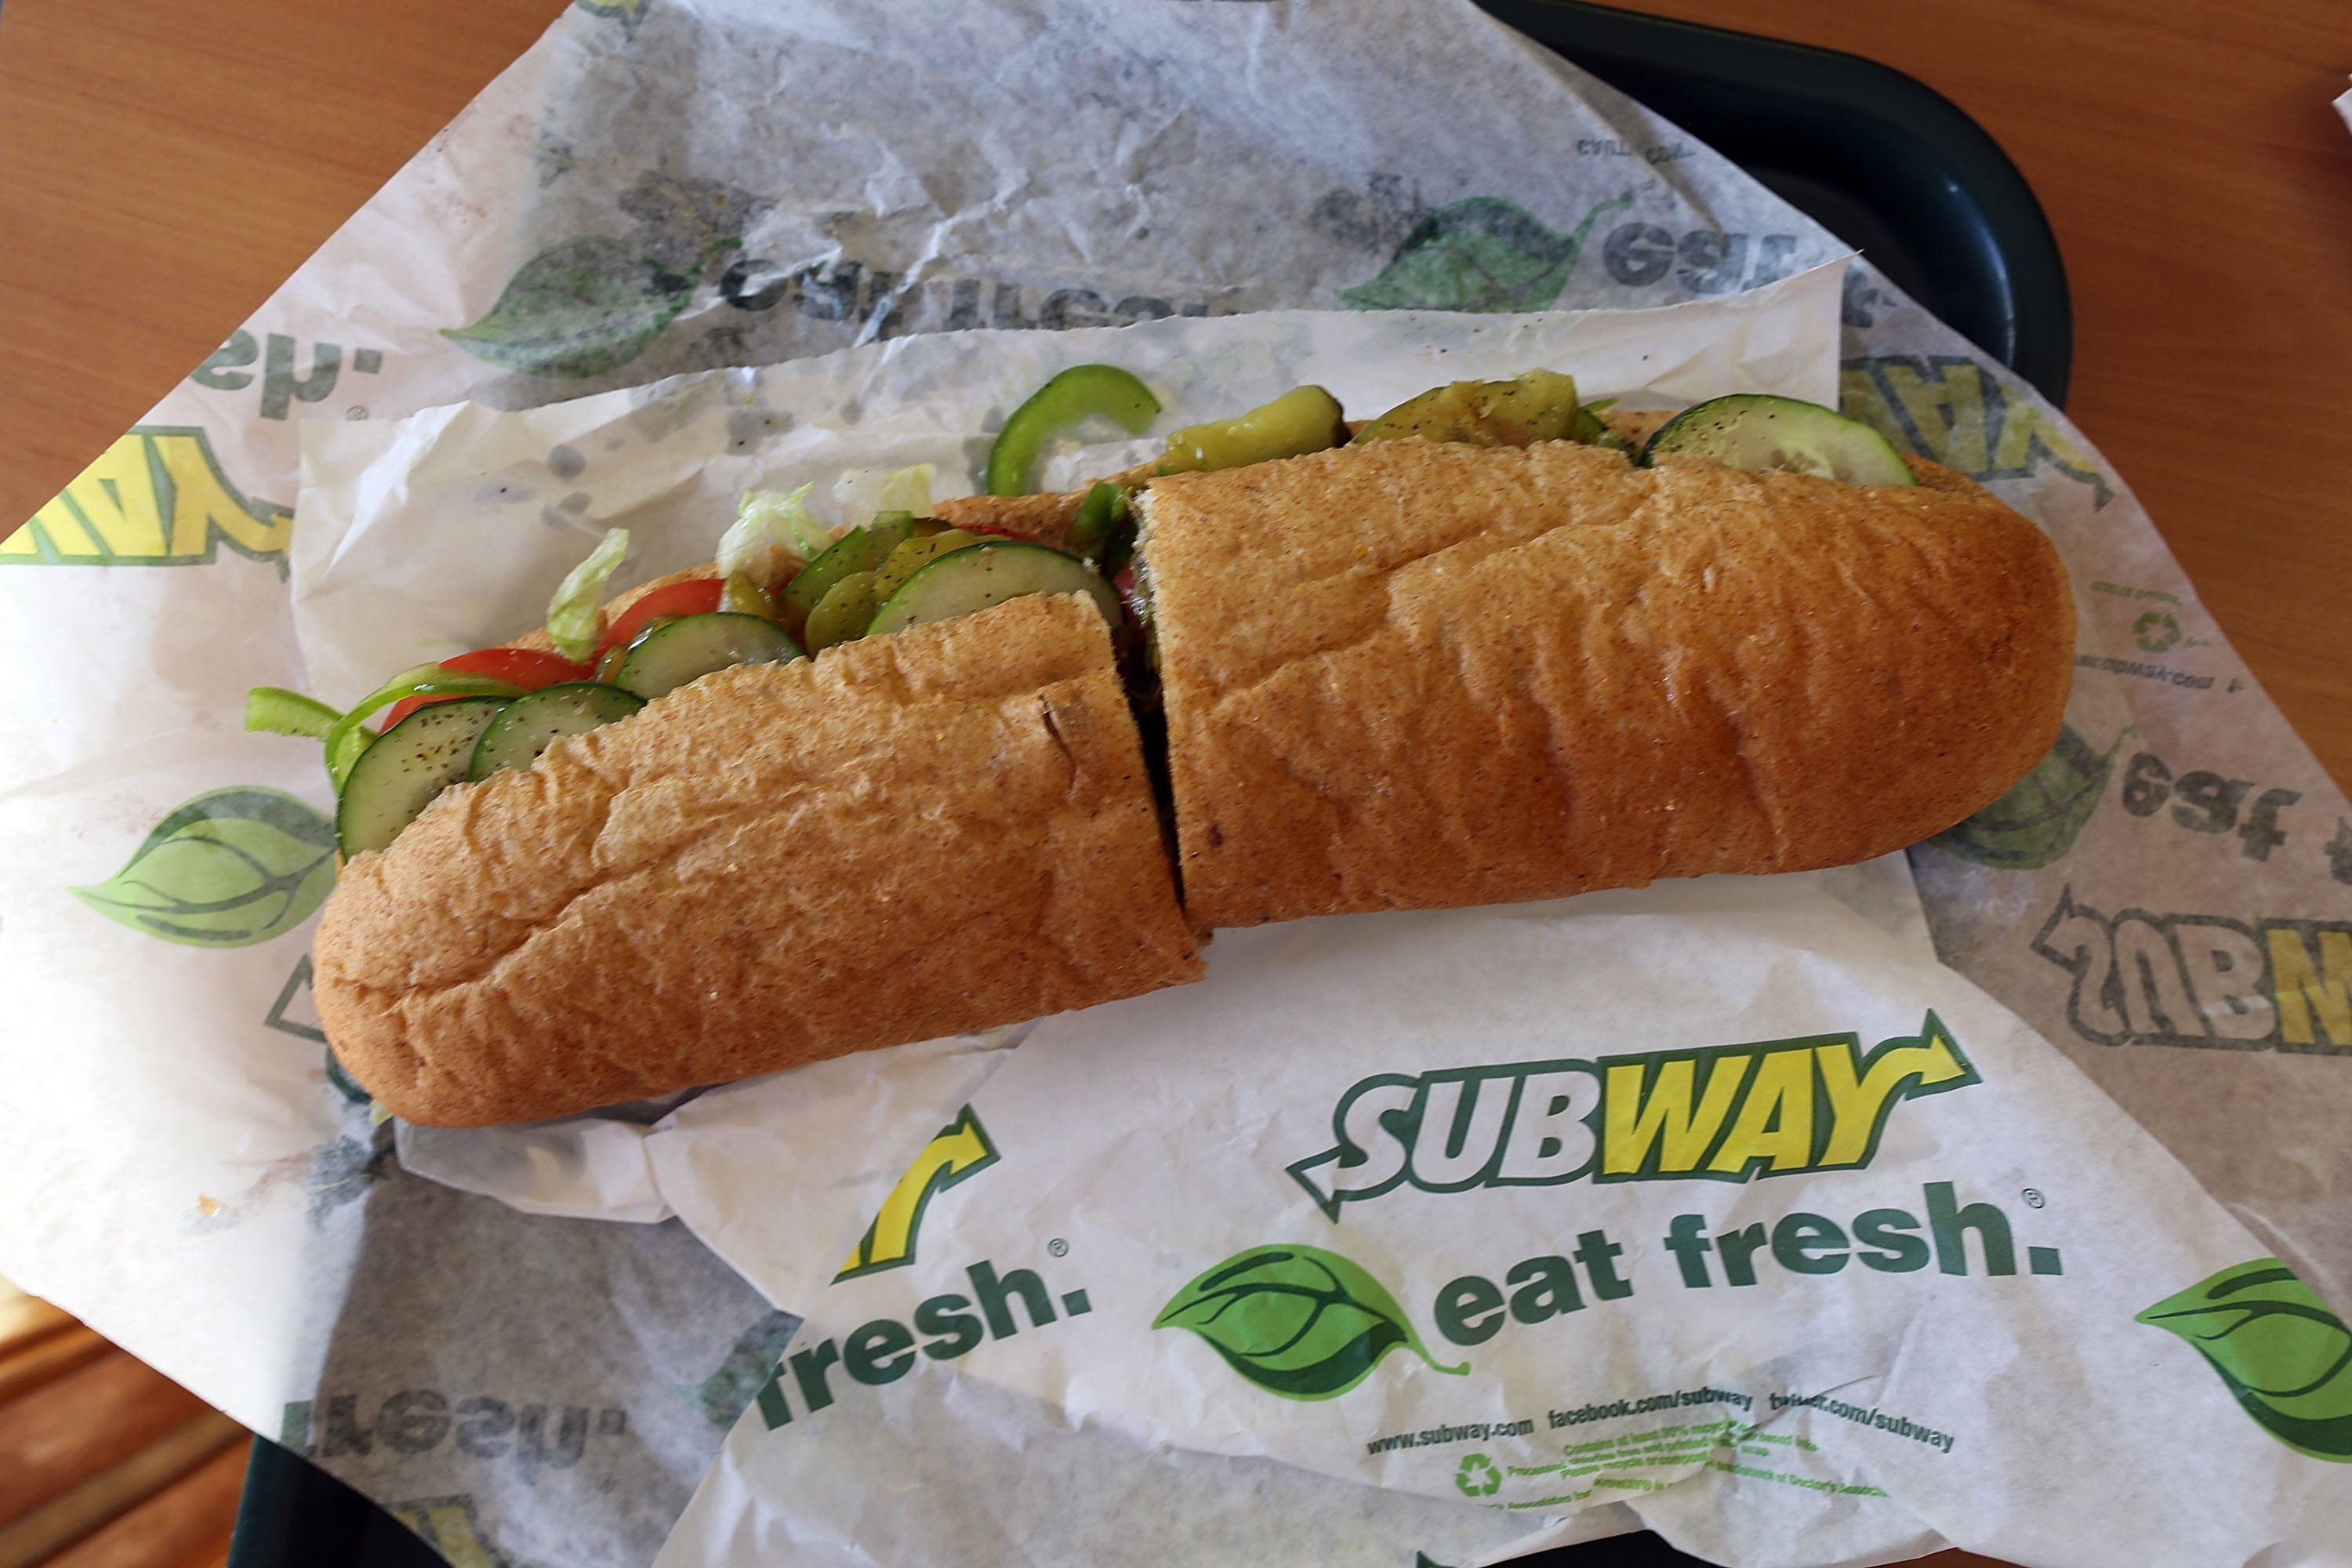 Subway sandwich length